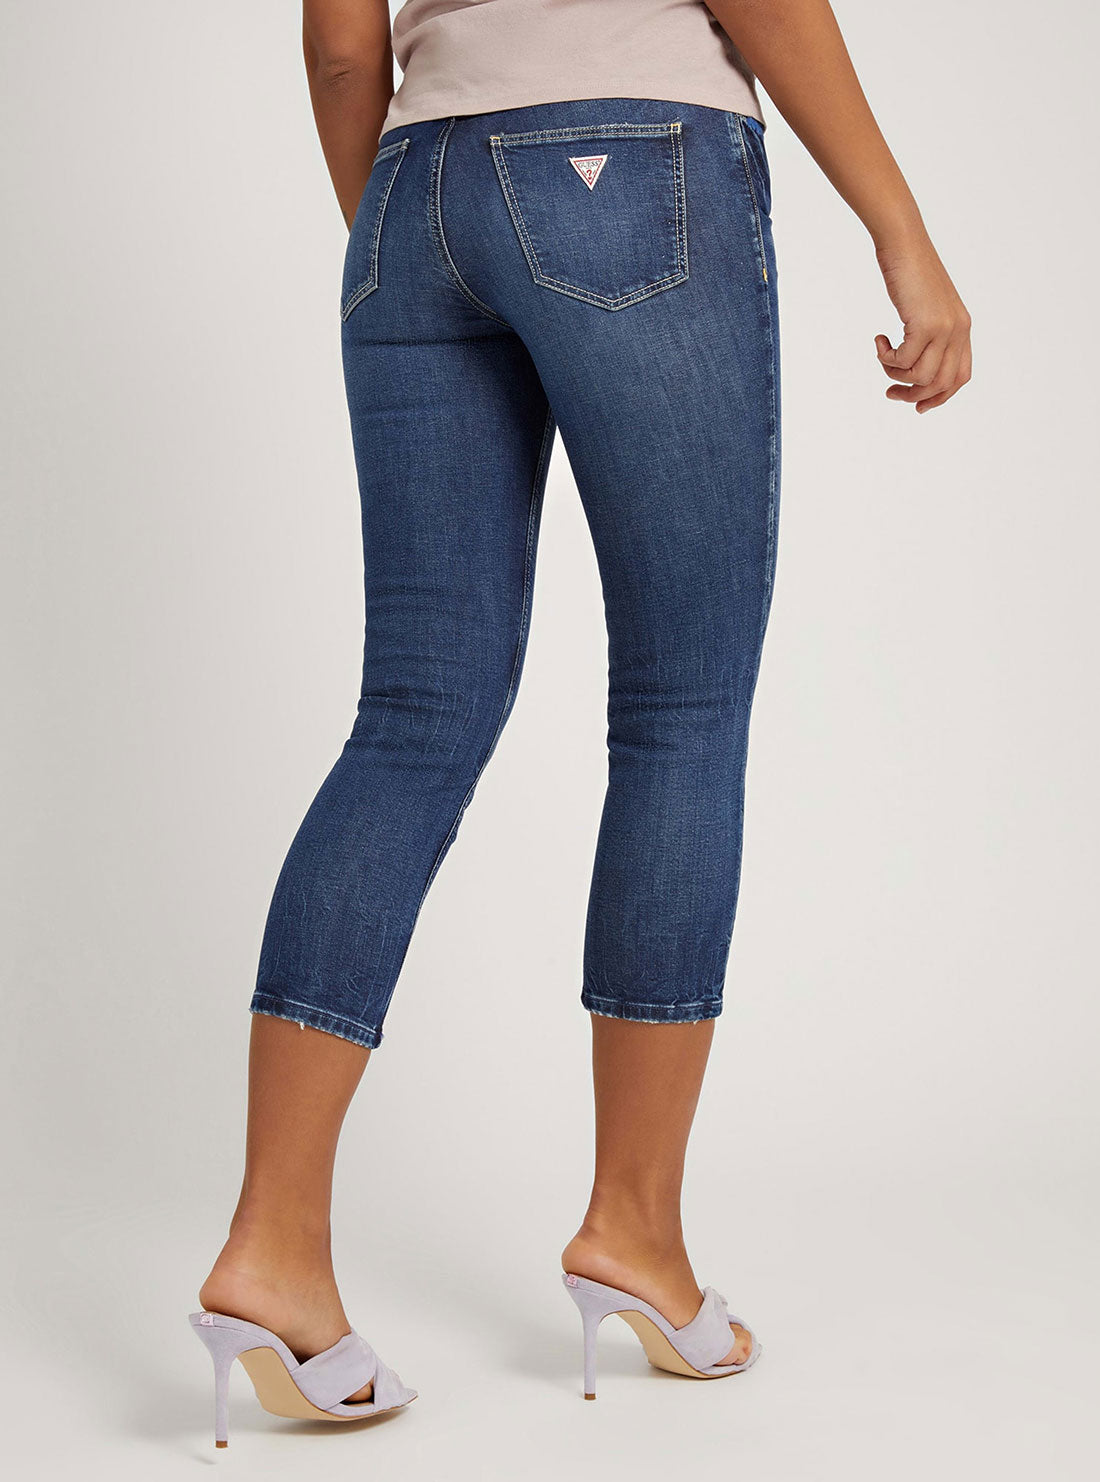 GUESS Womens High-Rise Skinny Fit 1981 Capri Denim Jeans In Mid Wash W2GA78D4KH8 Back View